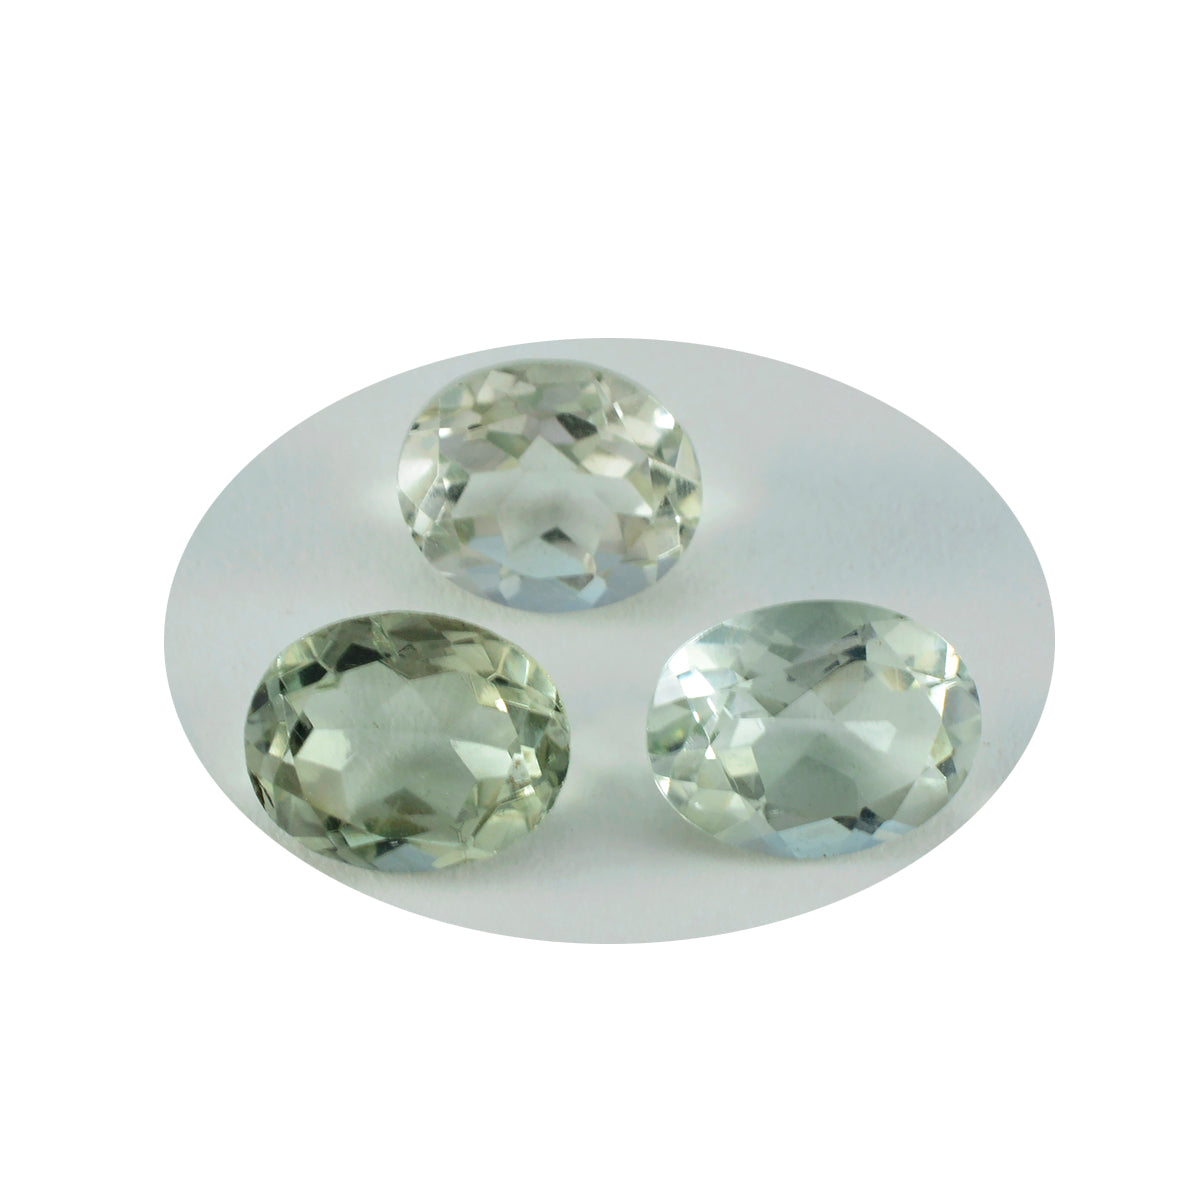 Riyogems 1PC Green Amethyst Faceted 9x11 mm Oval Shape amazing Quality Loose Gemstone